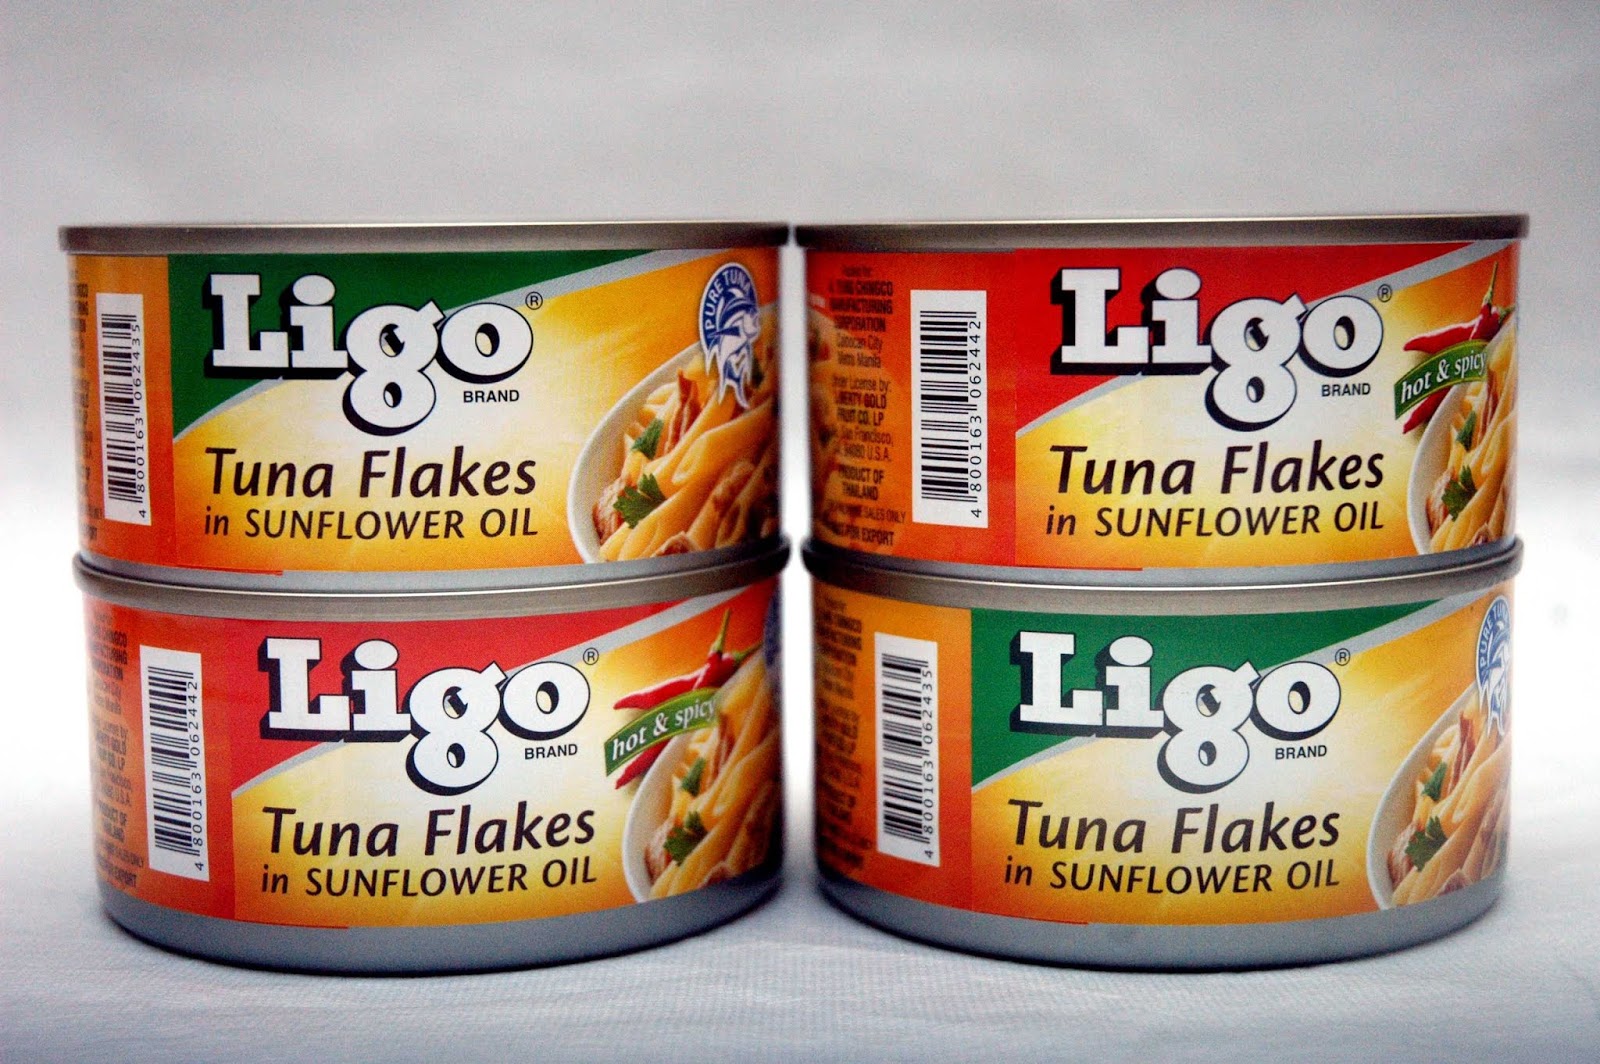 DUDE FOR FOOD: Walang Kupas Ang Klasik: 65 Years of Memorable Stories with Ligo Sardines